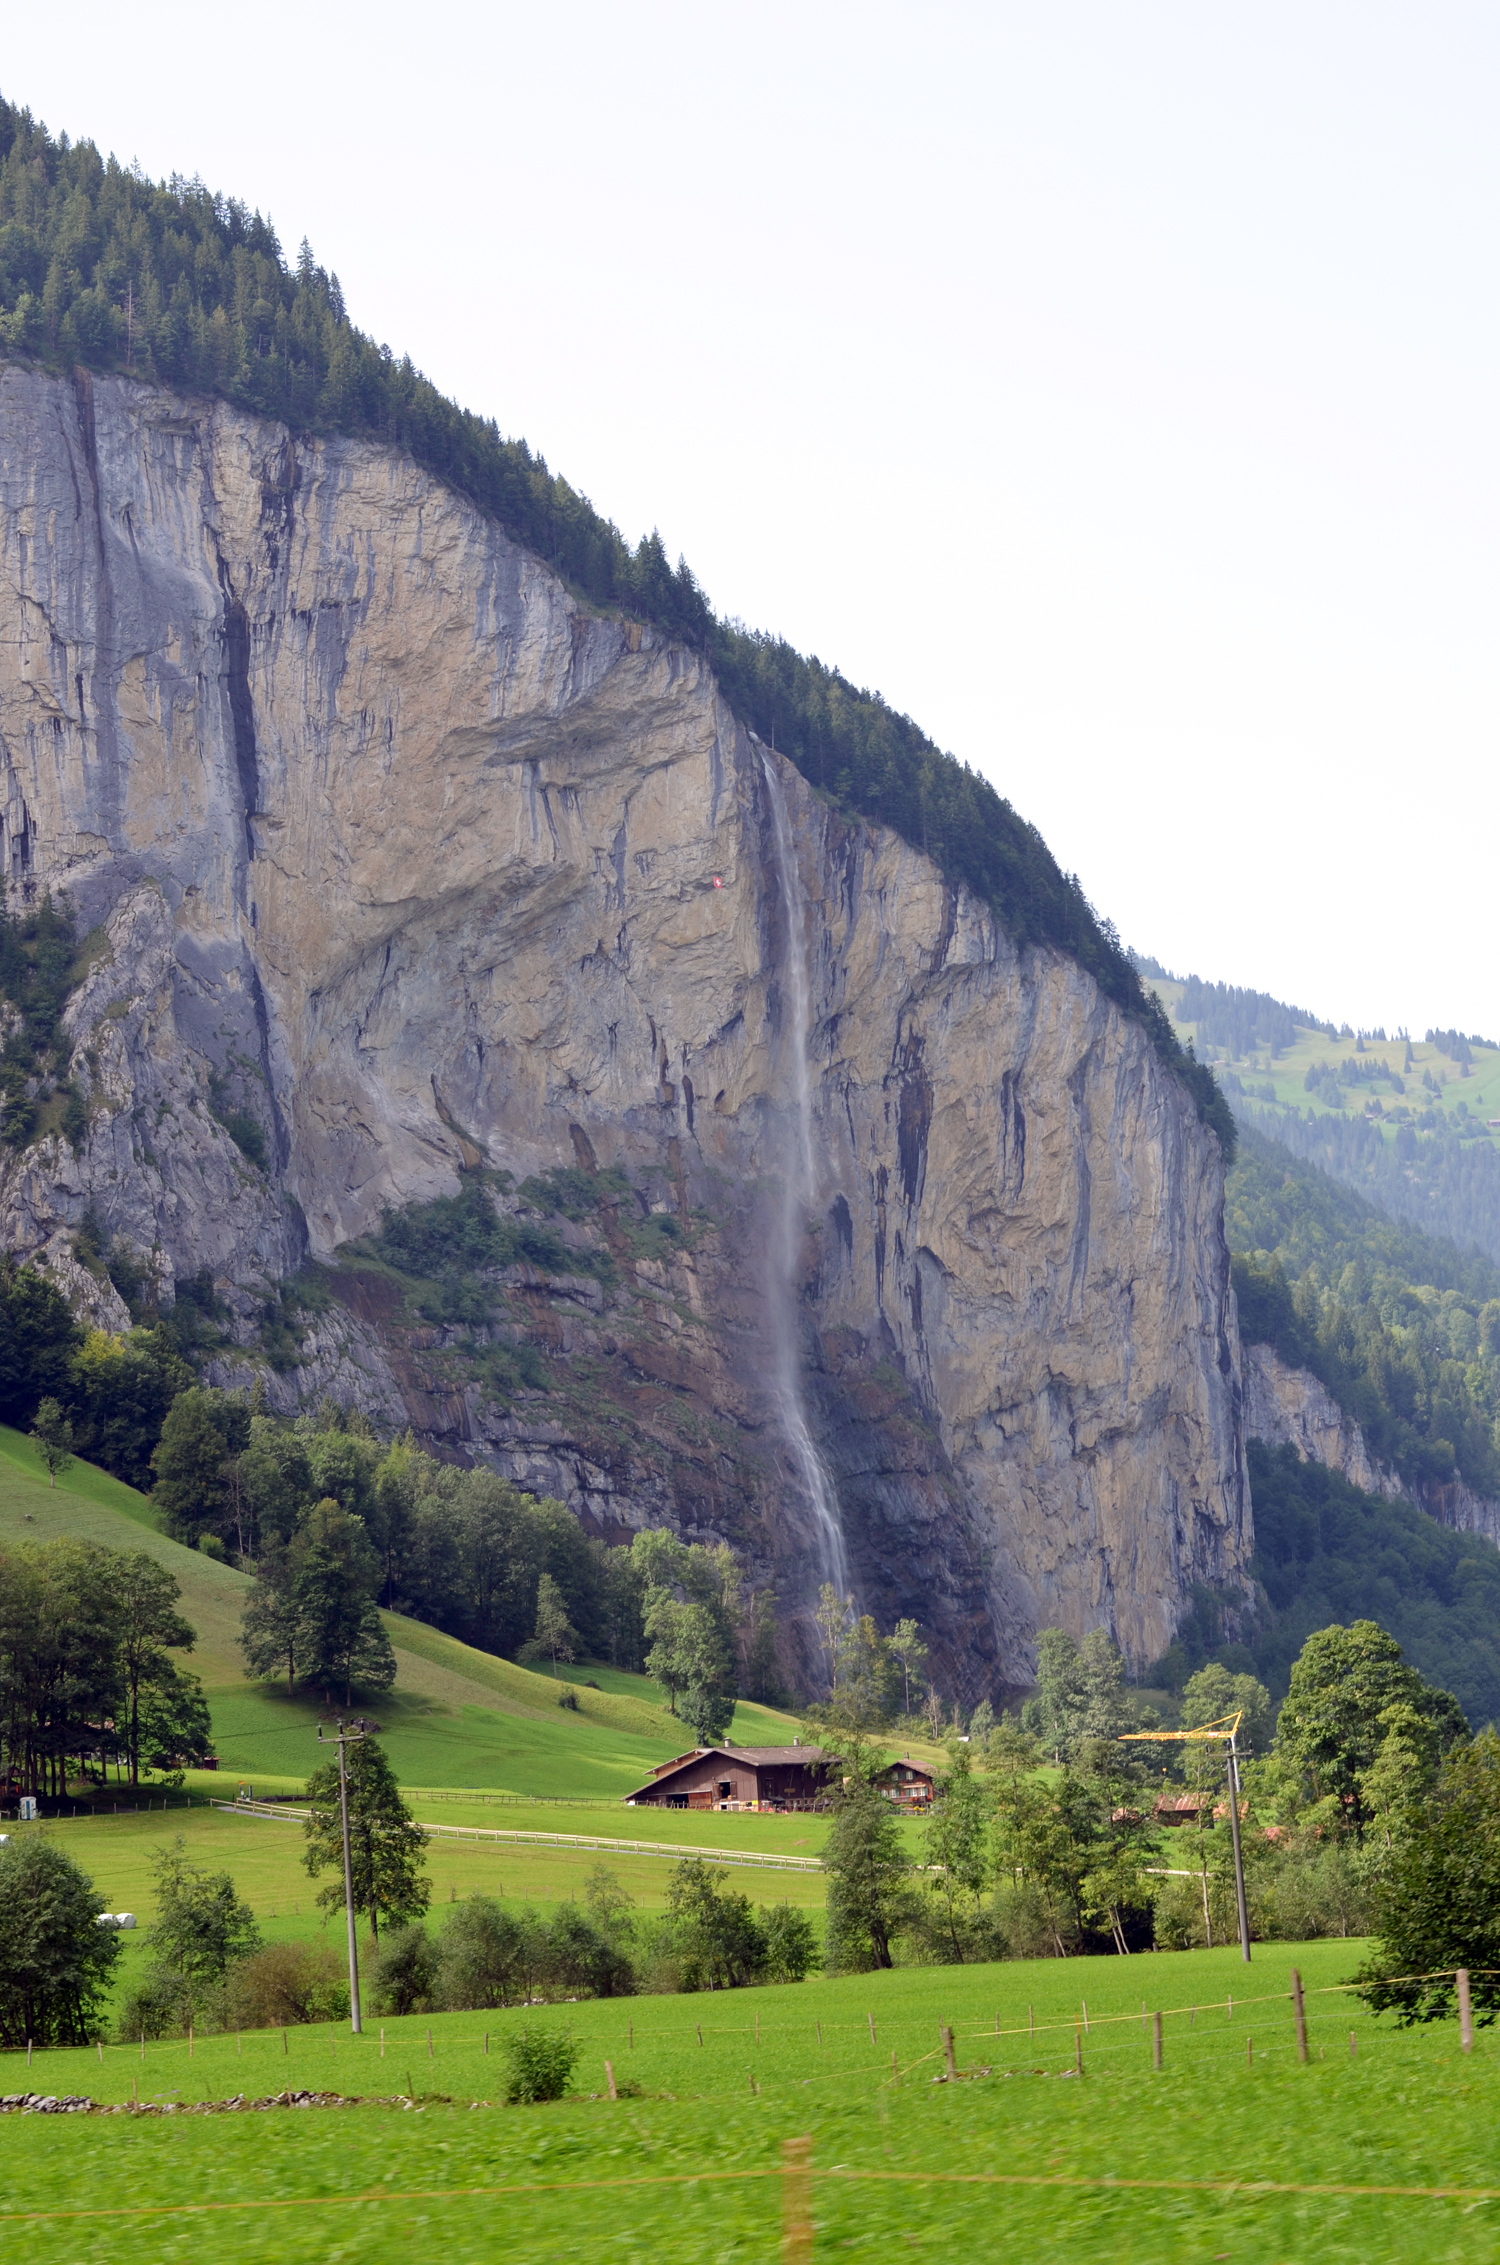 mercredie-blog-geneve-suisse-voyage-my-switzerland-grand-tour-roadtrip-europcar-accor-hotel-chutes-cascades-trummelbach-falls